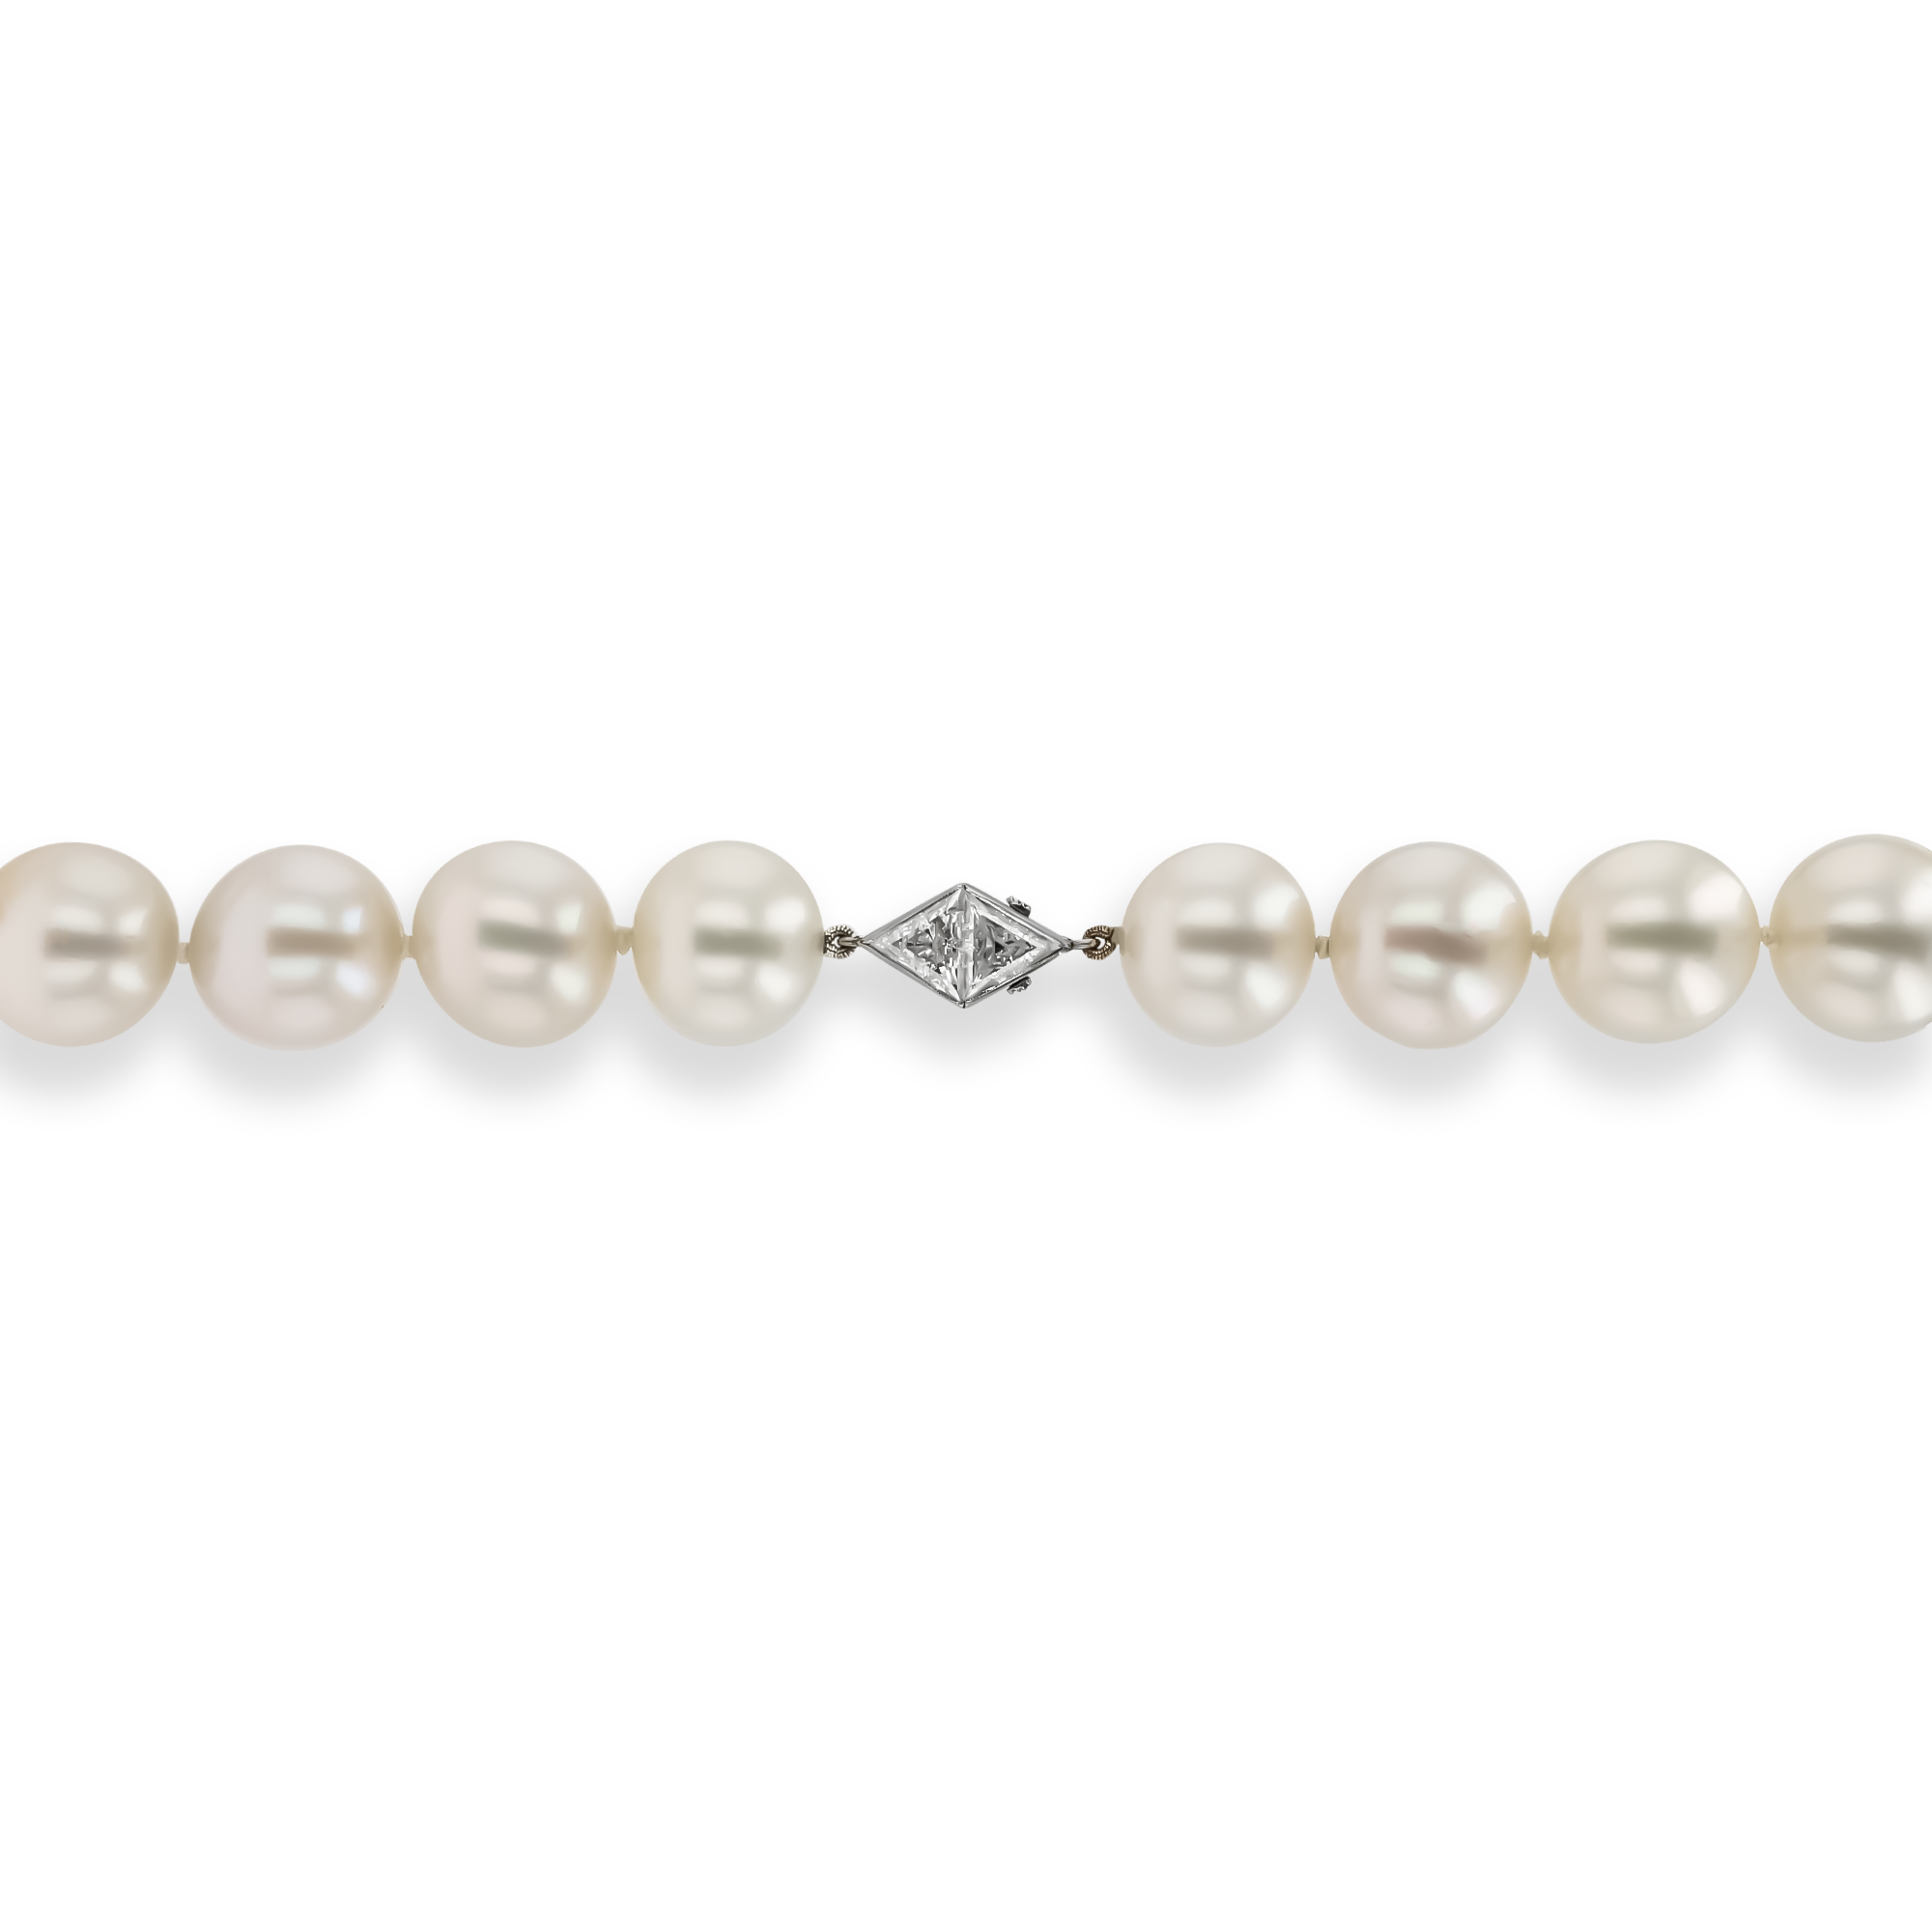 South Sea Pearl Necklace with Art Deco Diamond Clasp Trilliant Cut, Rubover Set_3